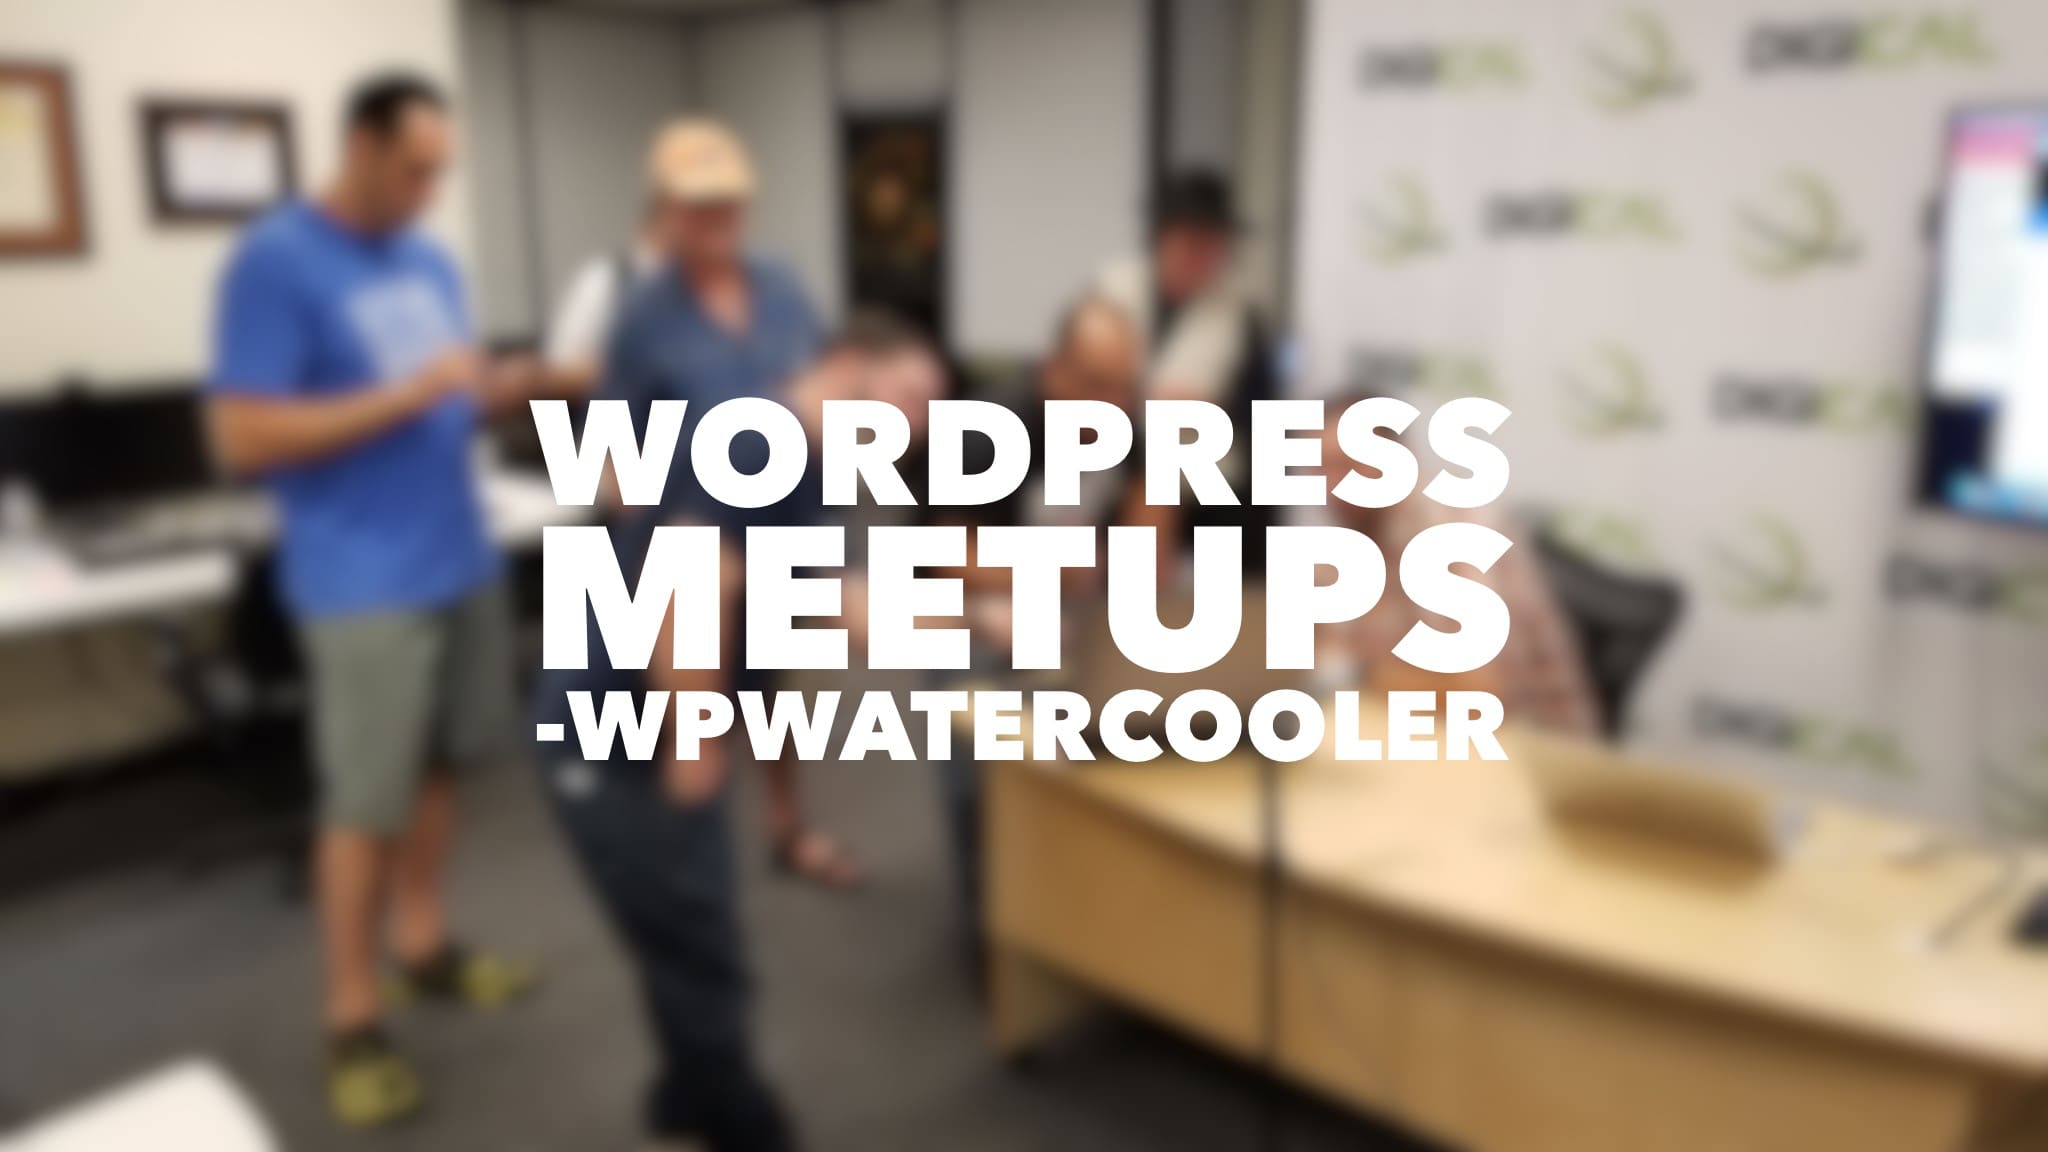 EP344 -WordPress Meetups